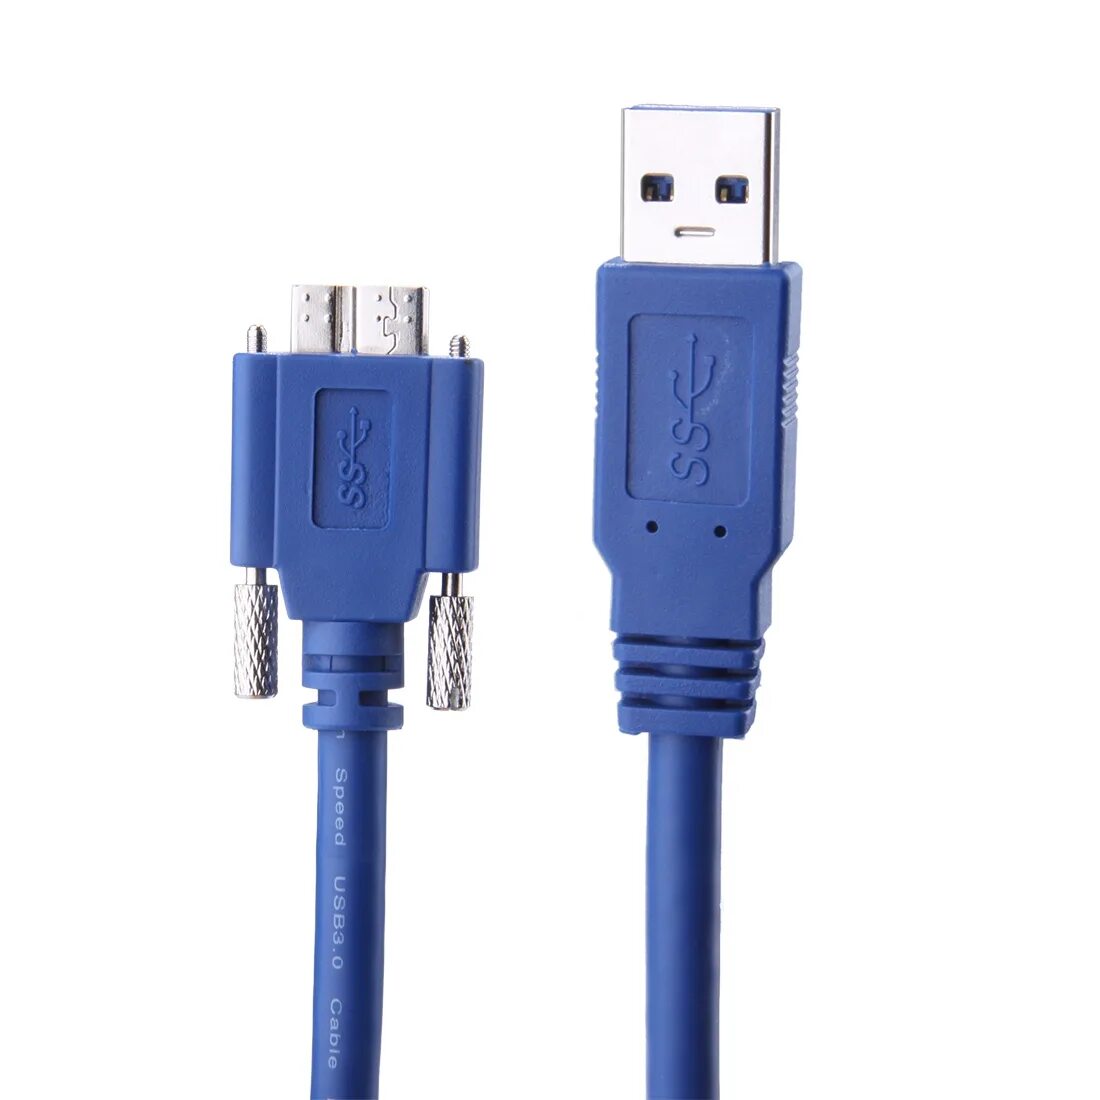 USB 3.0 Cable Micro-b. Micro USB 3.0 B male. Кабель Micro USB 3.0 B 2 USB. Кабель USB3.0 A- USB 3.0 Micro-b 2 метра.